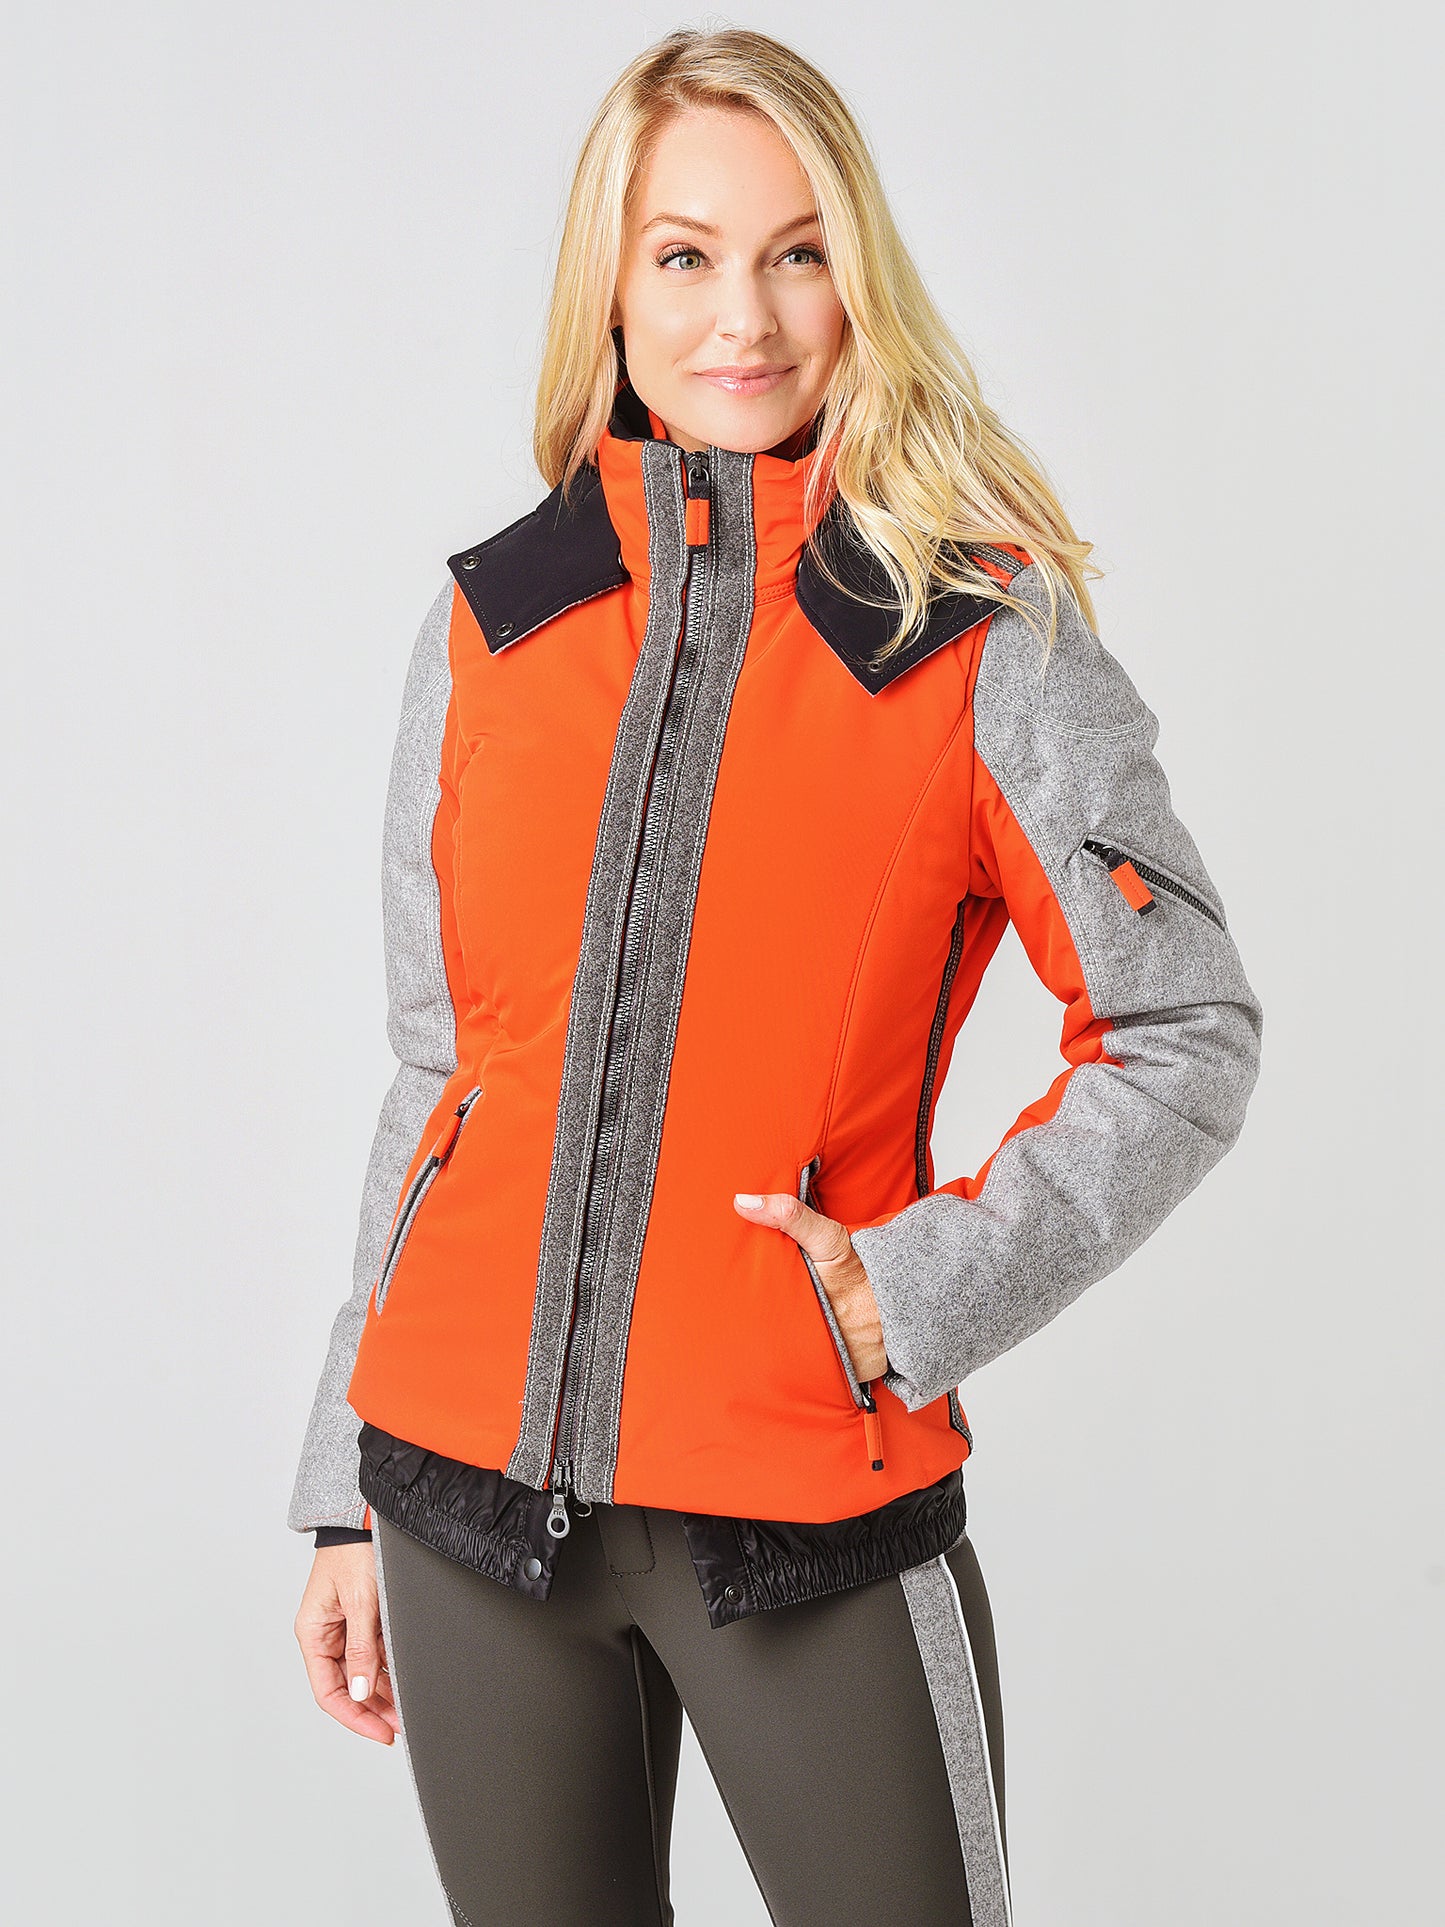 Frauenschuh Women's Karla Multi Ski Jacket